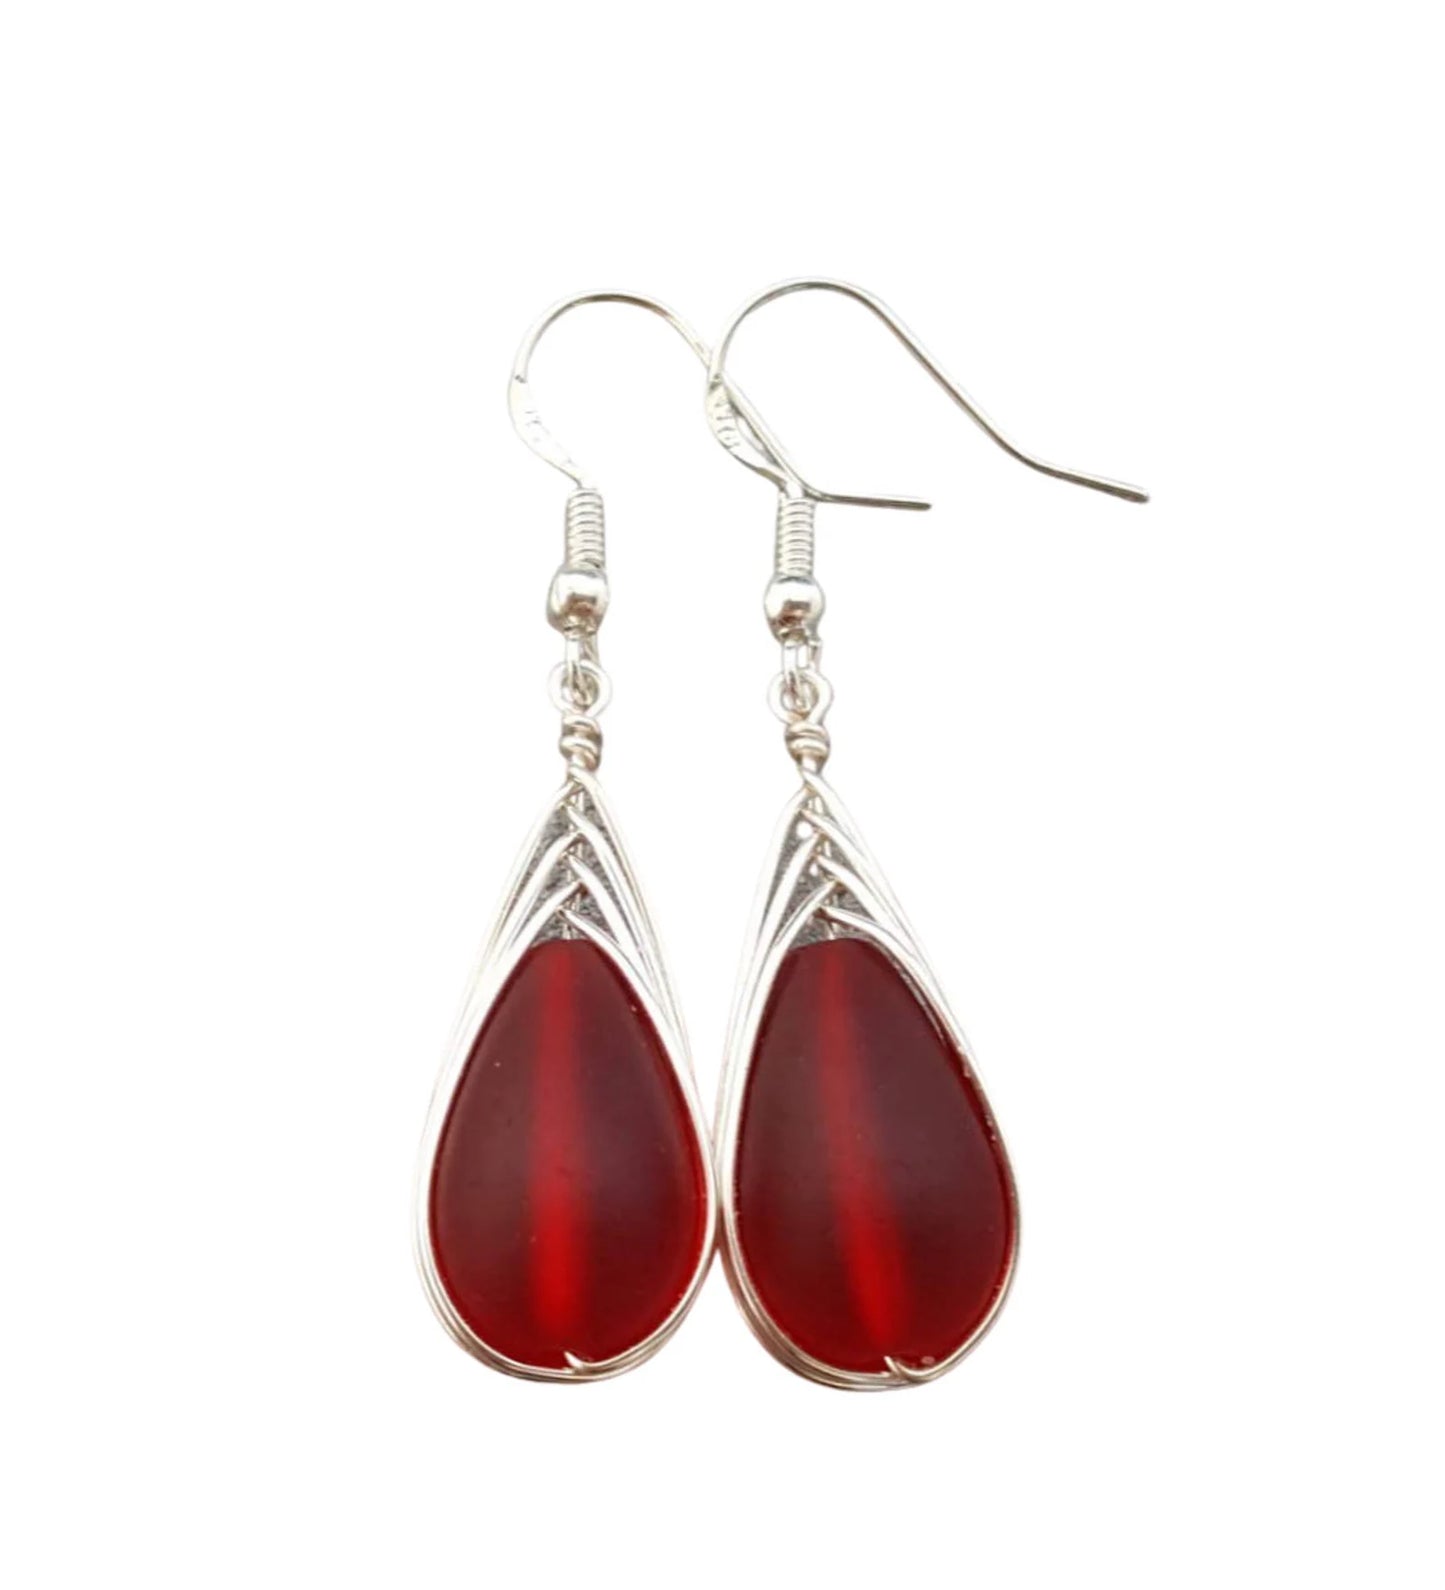 Handmade in Hawaii, Wire braided red sea glass earrings, , "July birthstone", Sea glass jewelry